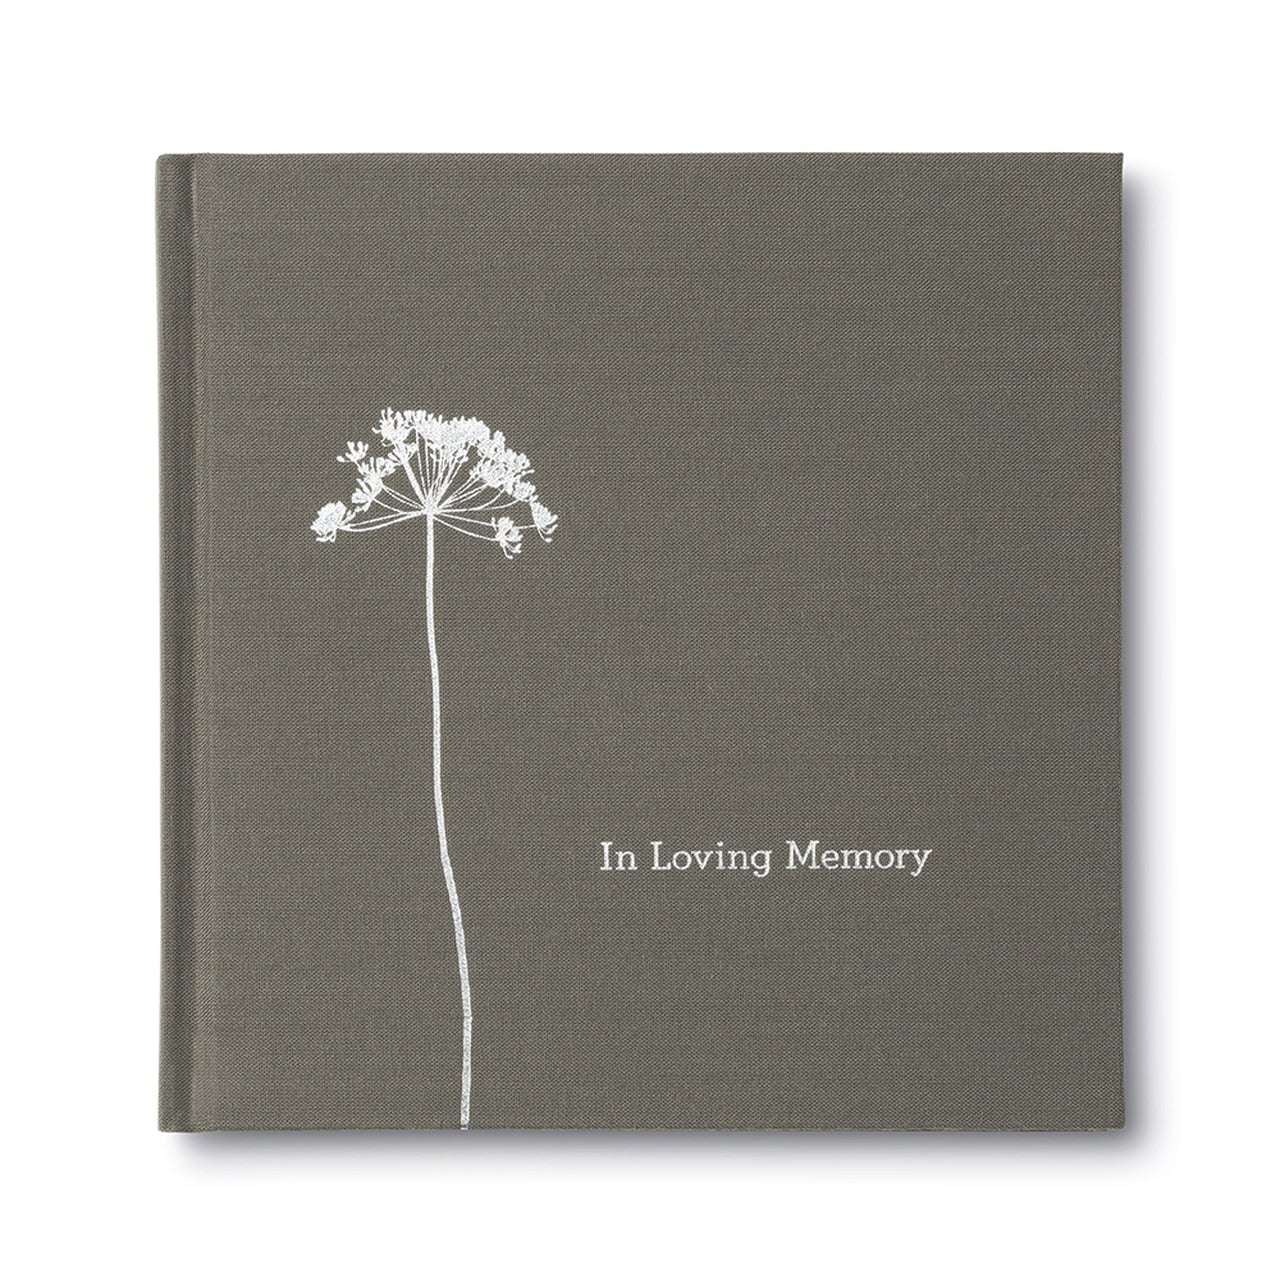 Book " In Loving Memory "